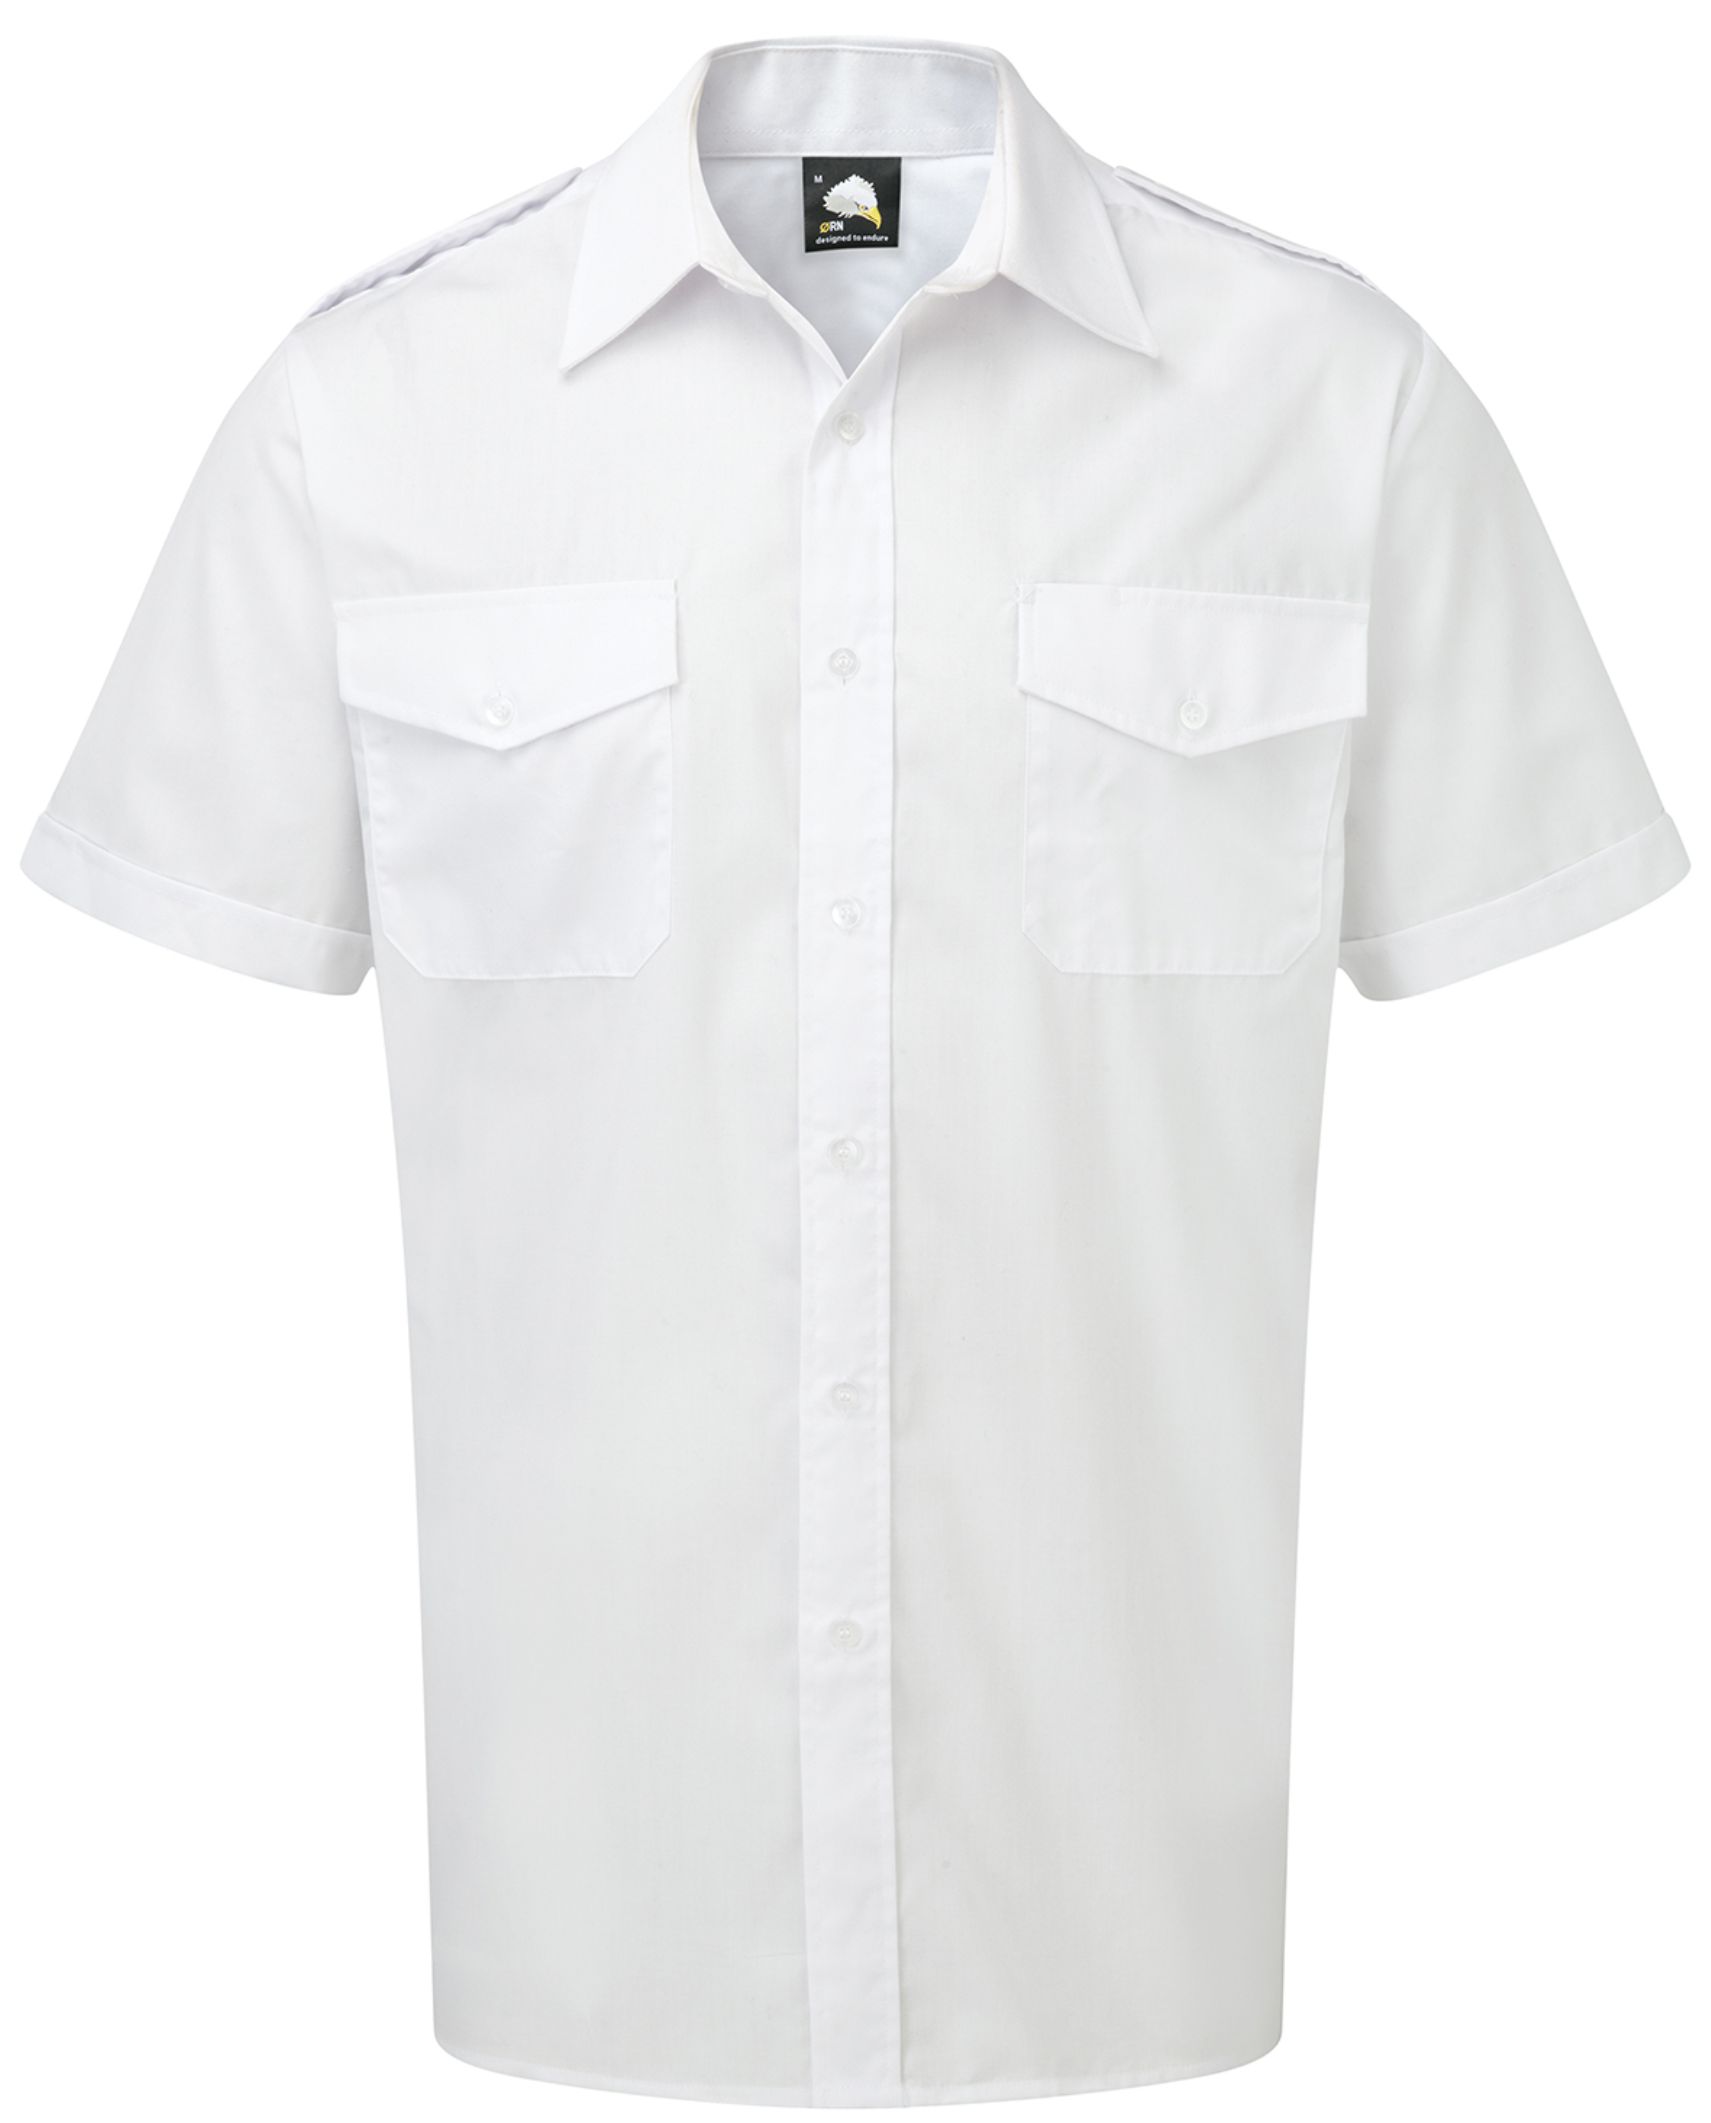 Orn 5700 Premium Short Sleeve Pilot Shirt